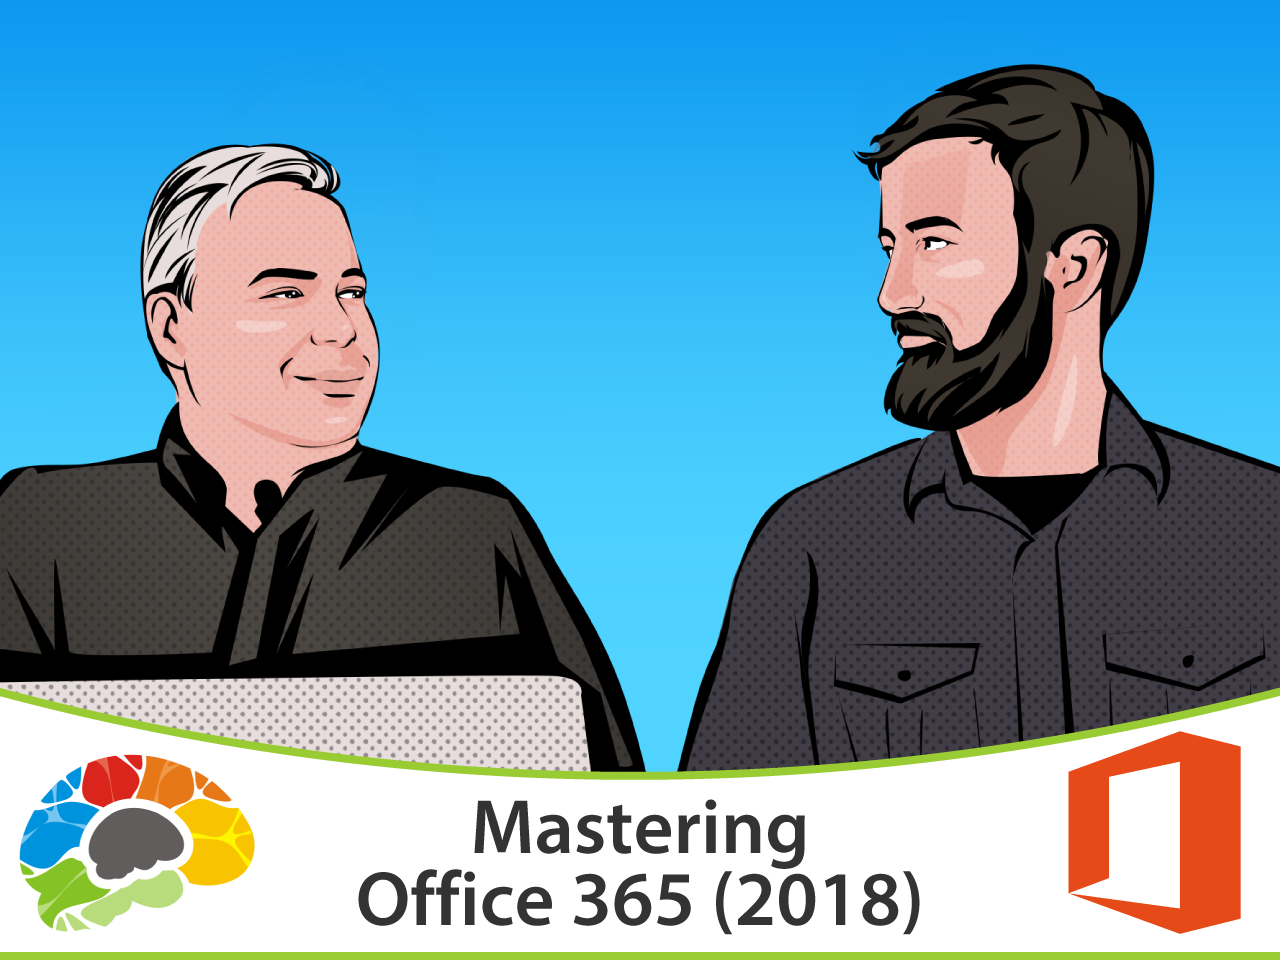 Mastering Office 365 (2018), Singapore elarning online course